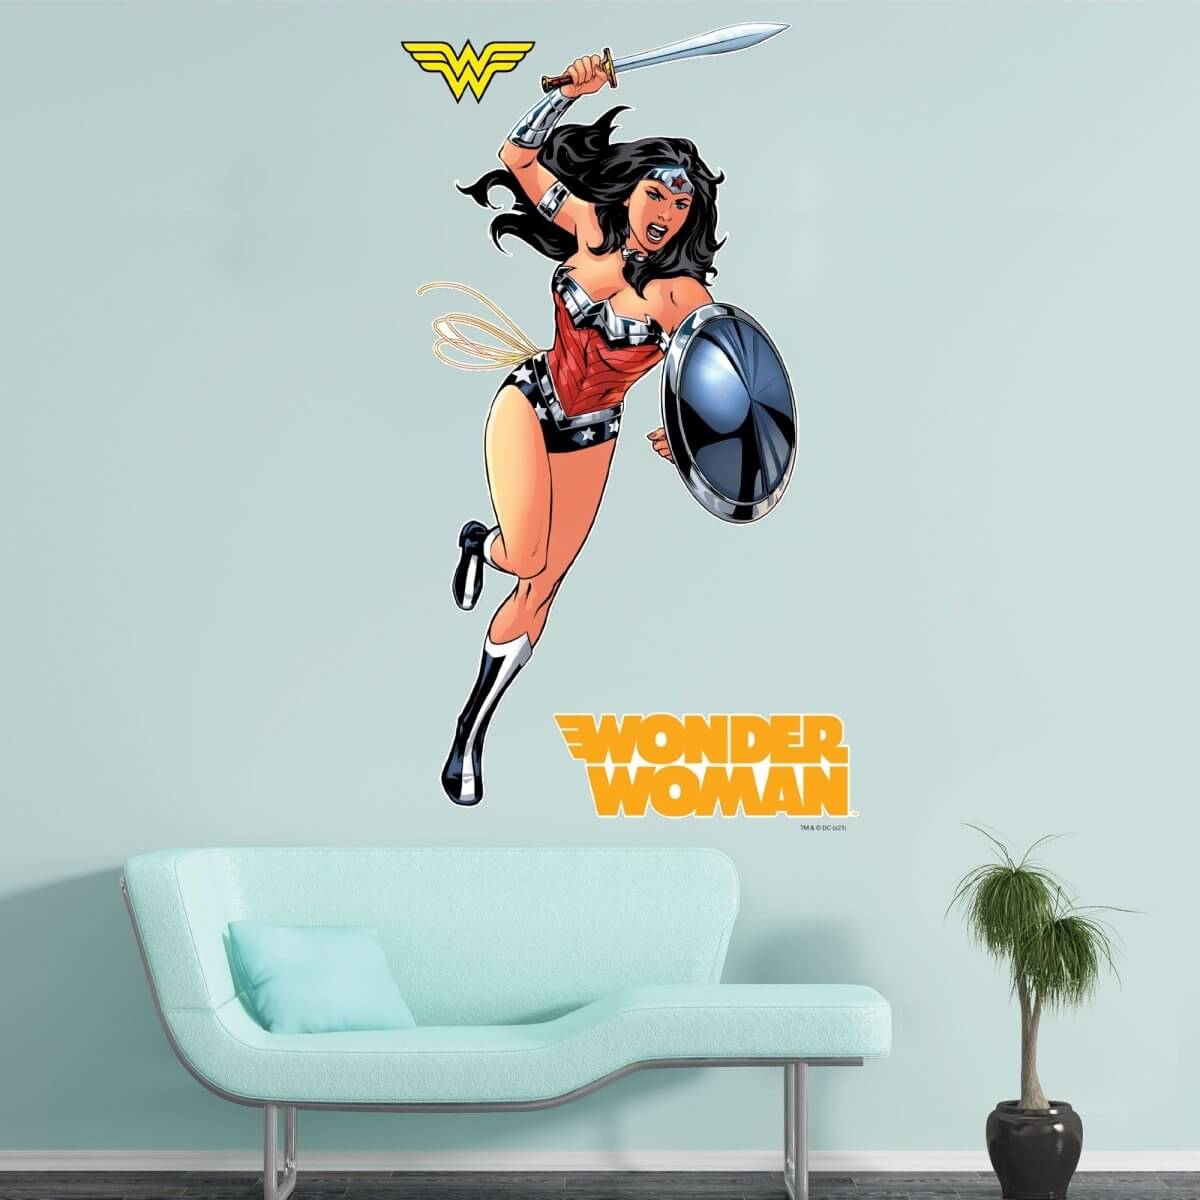 Kismet Decals Evolution of Wonder Woman Original Artwork 2011 Officially Licensed Wall Sticker - Easy DIY DC Comics Home, Kids or Adult Bedroom, Office, Living Room Decor Wall Art - Kismet Decals